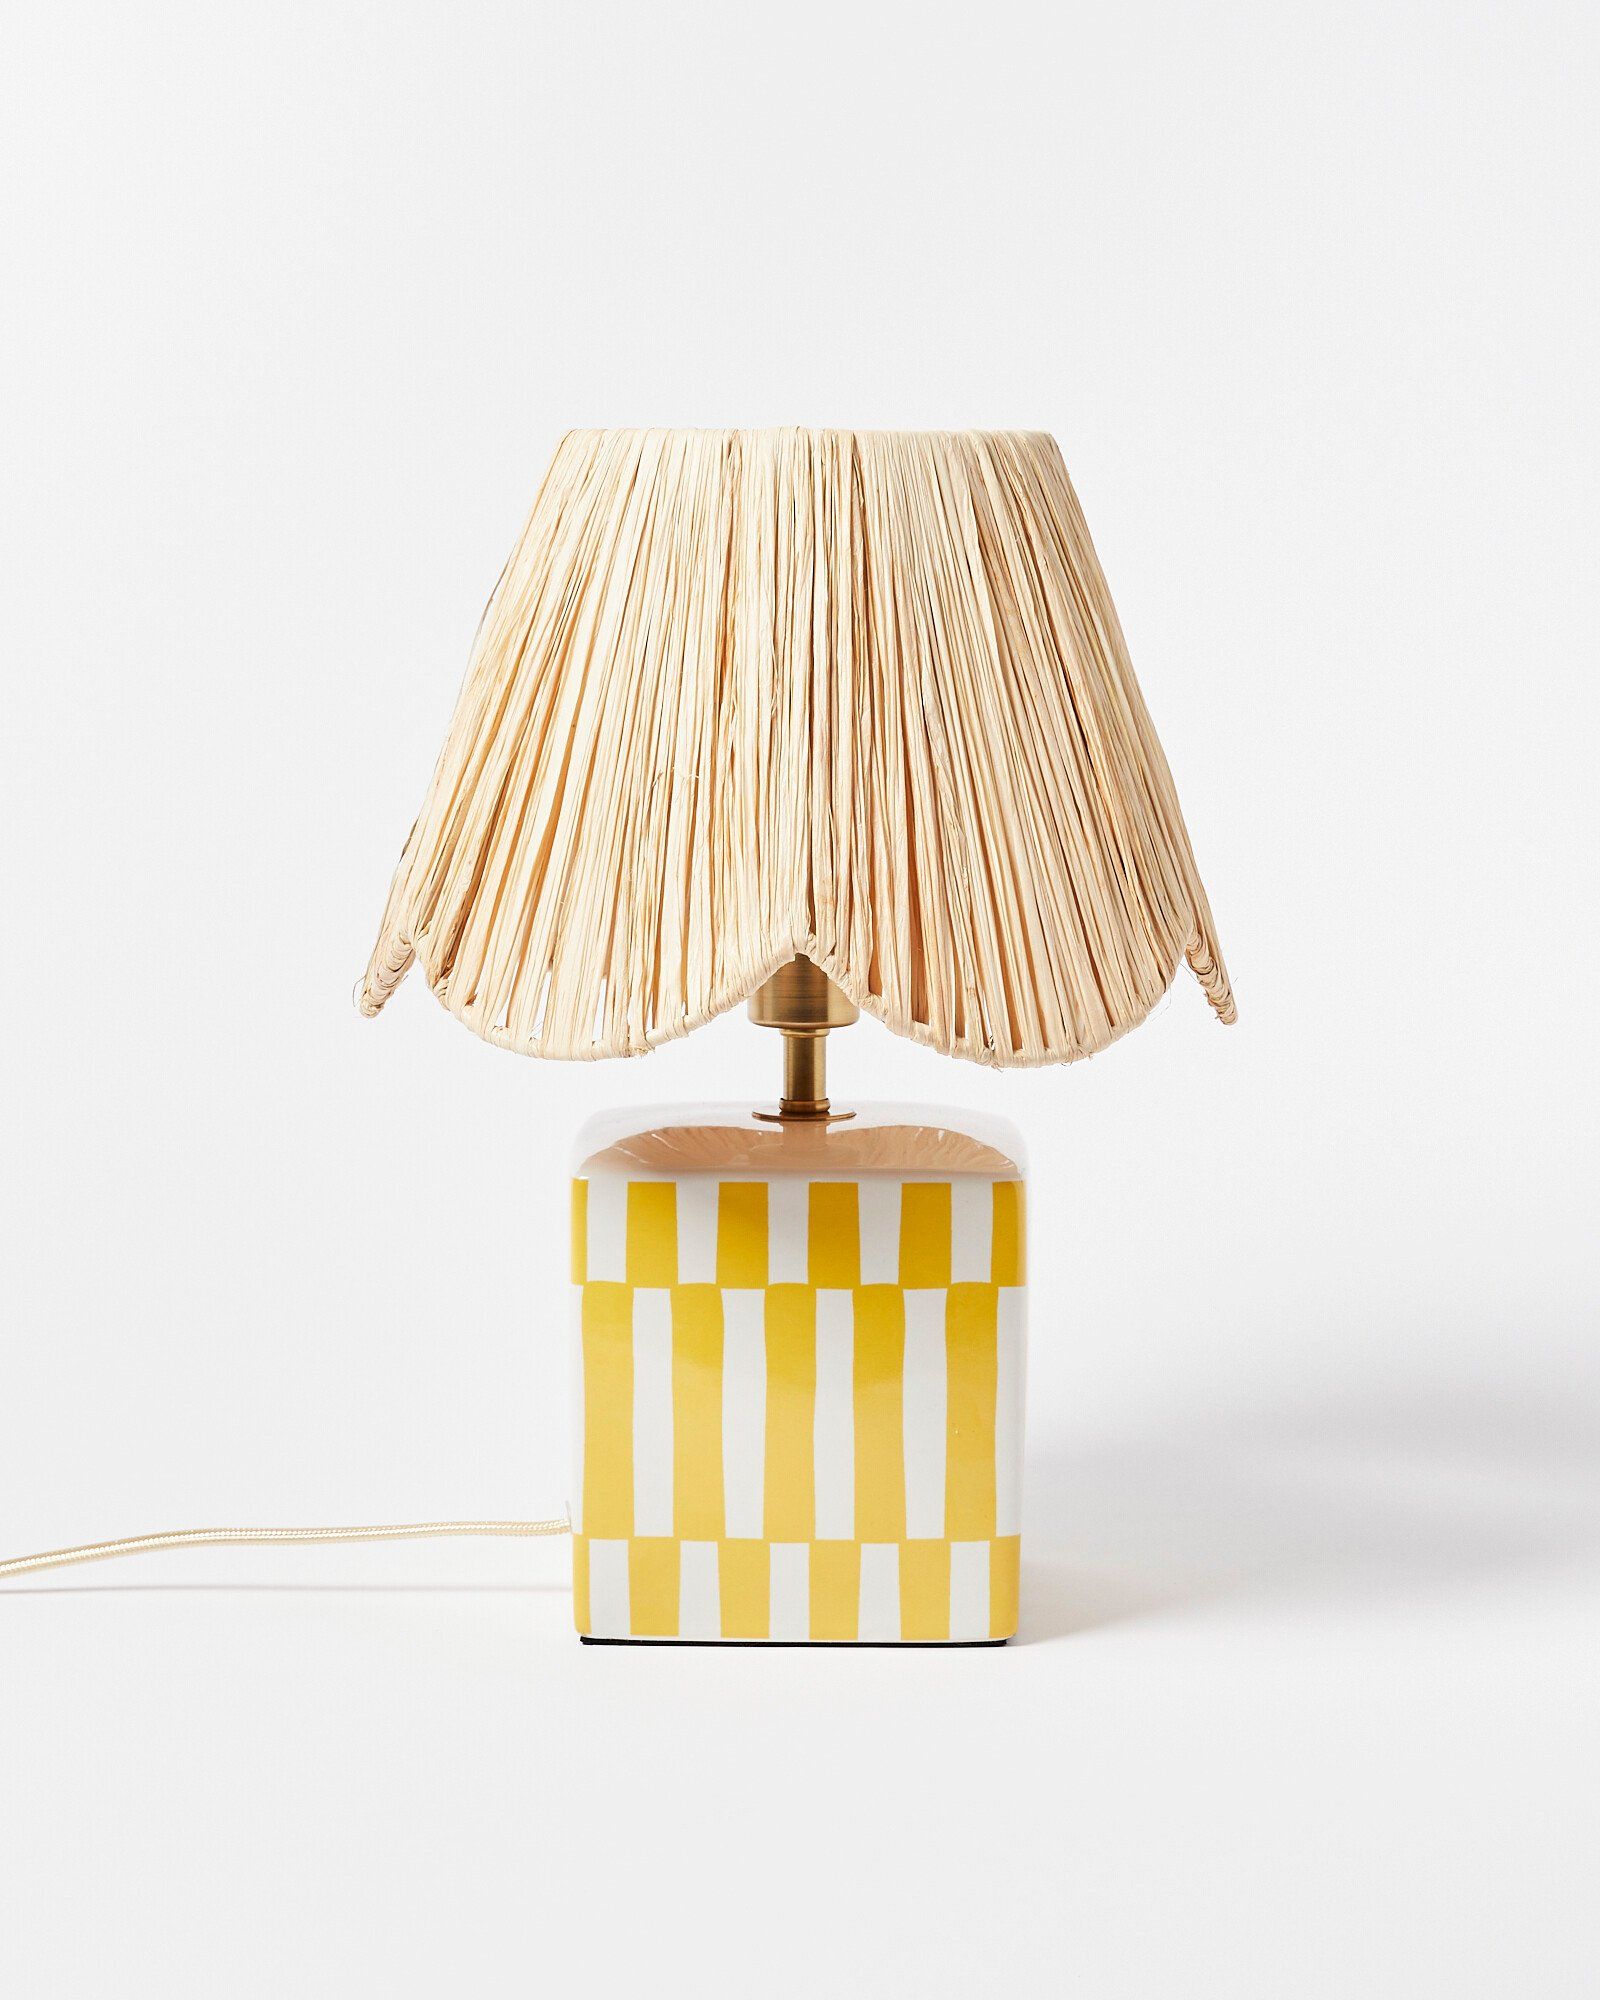 Ceramic Table Lamp Elegant Lighting Option for Your Home Décor